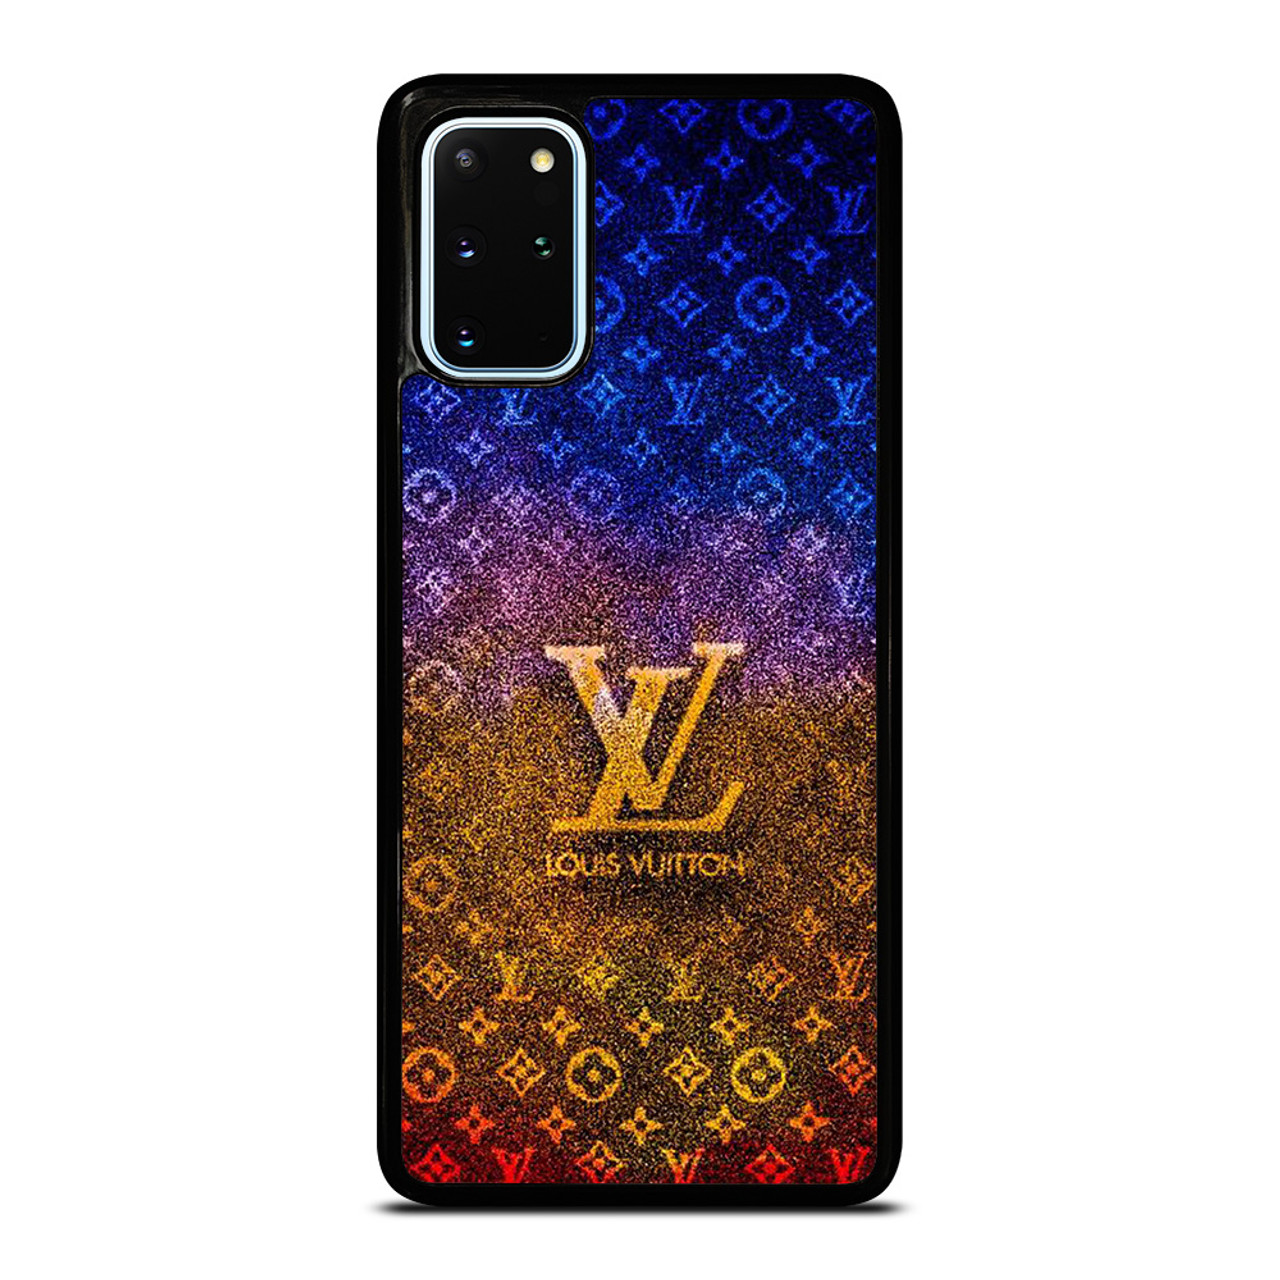 Louis Vuitton Galaxy S20 S21 Case Free Shipping